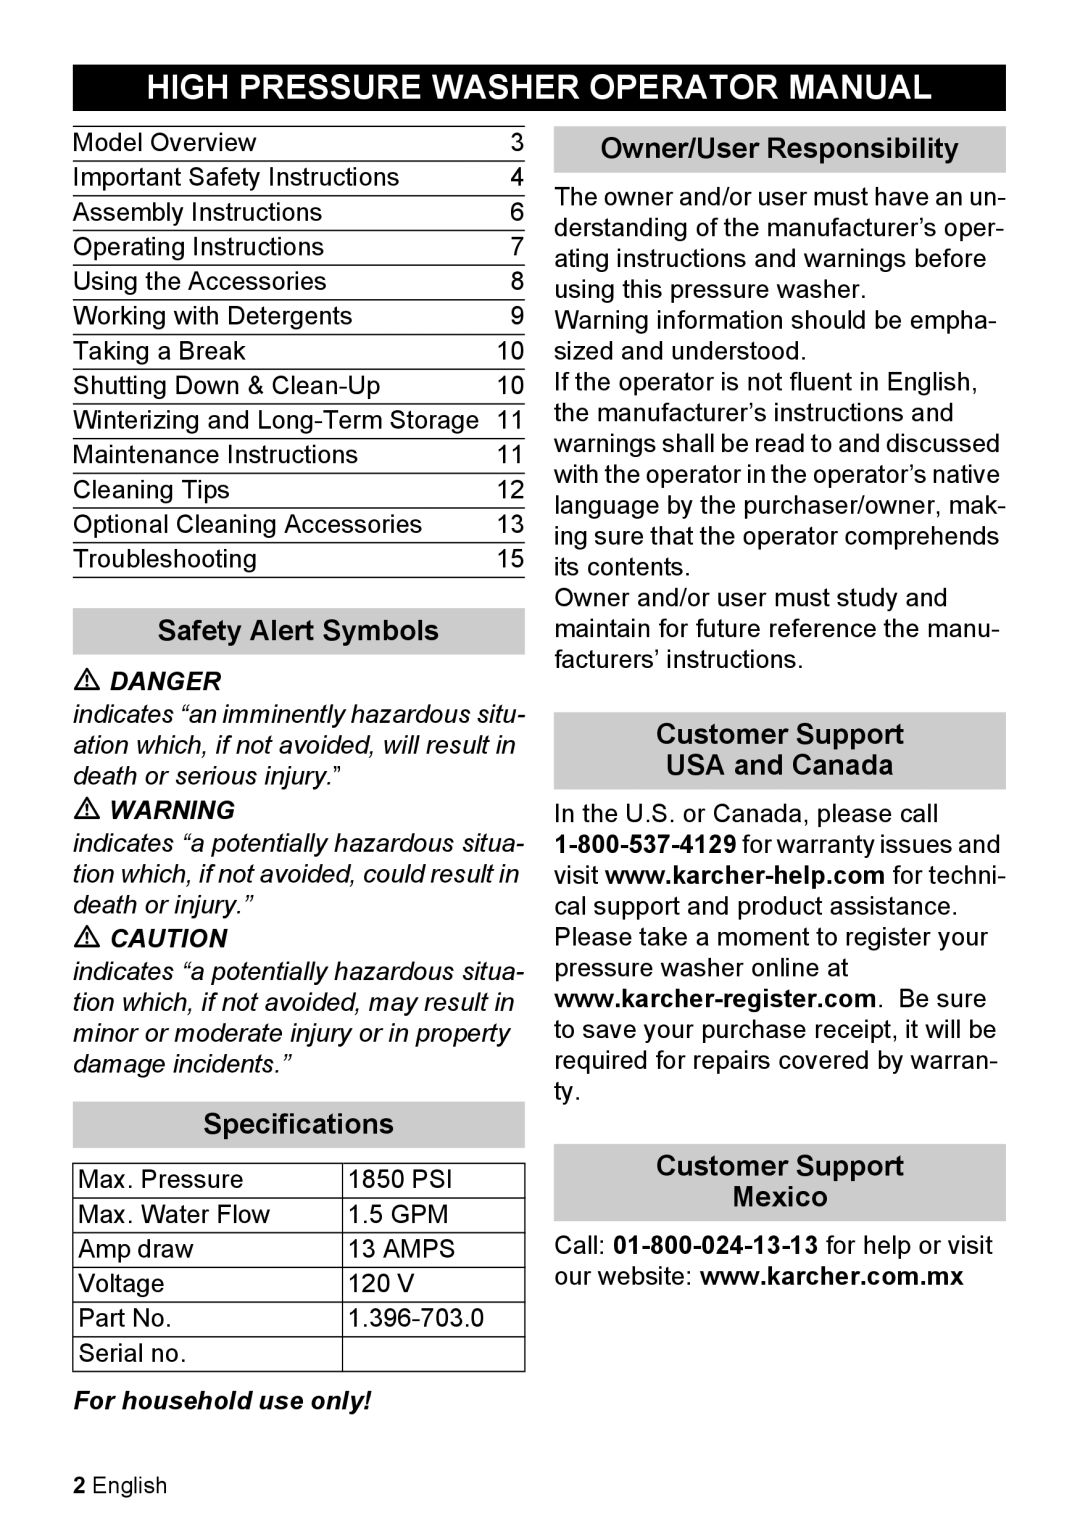 Karcher K 5.85 M High Pressure Washer Operator Manual, Owner/User Responsibility, Safety Alert Symbols, USA and Canada 